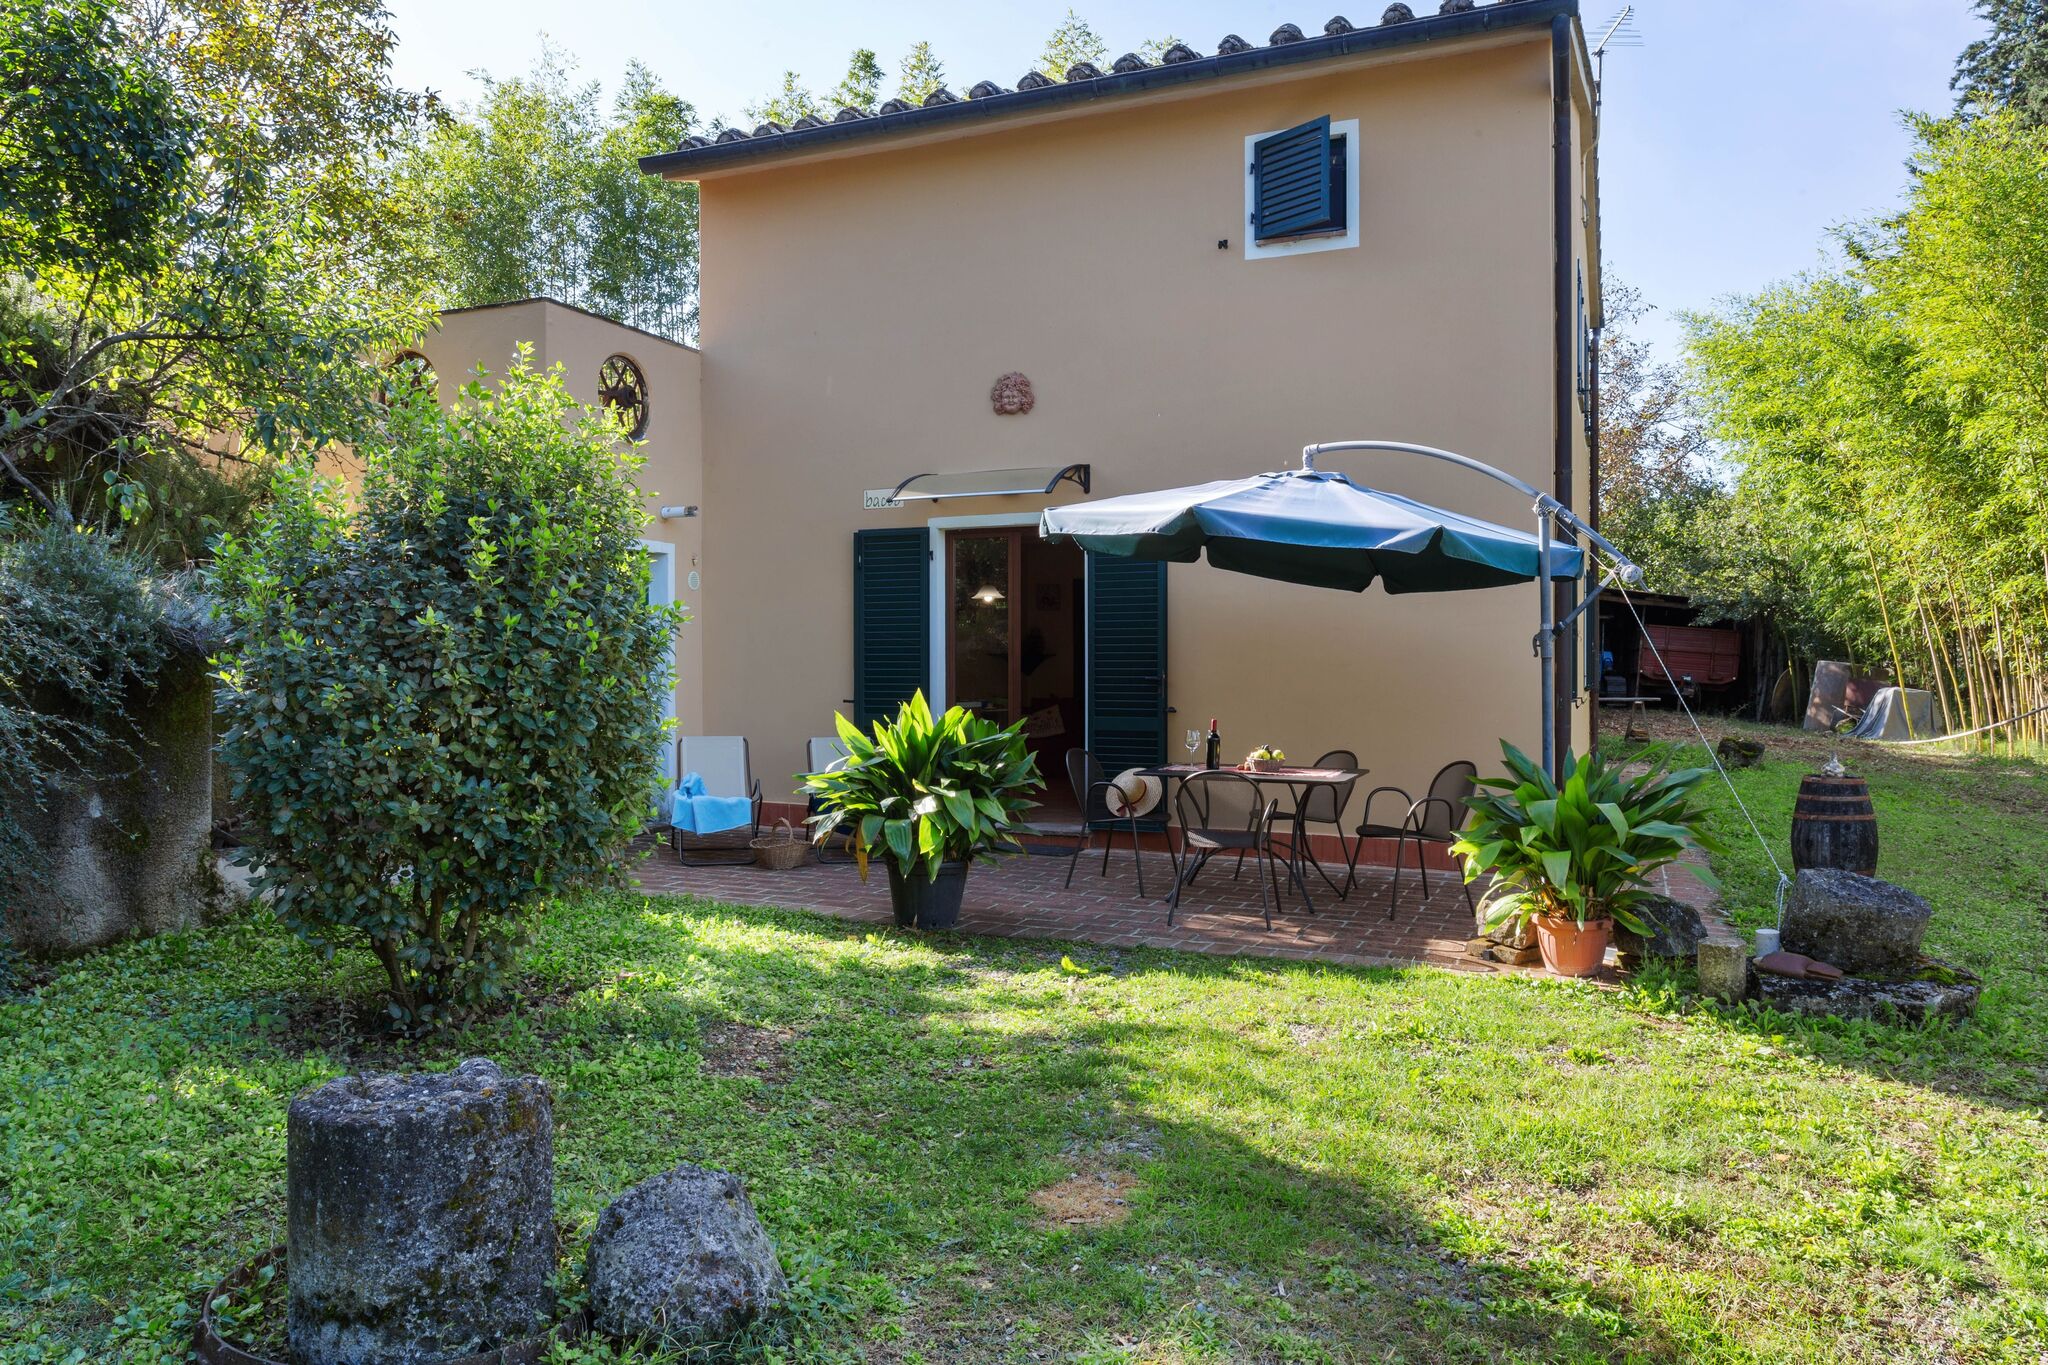 Typical farmhouse in Ville di corsano siena with garden